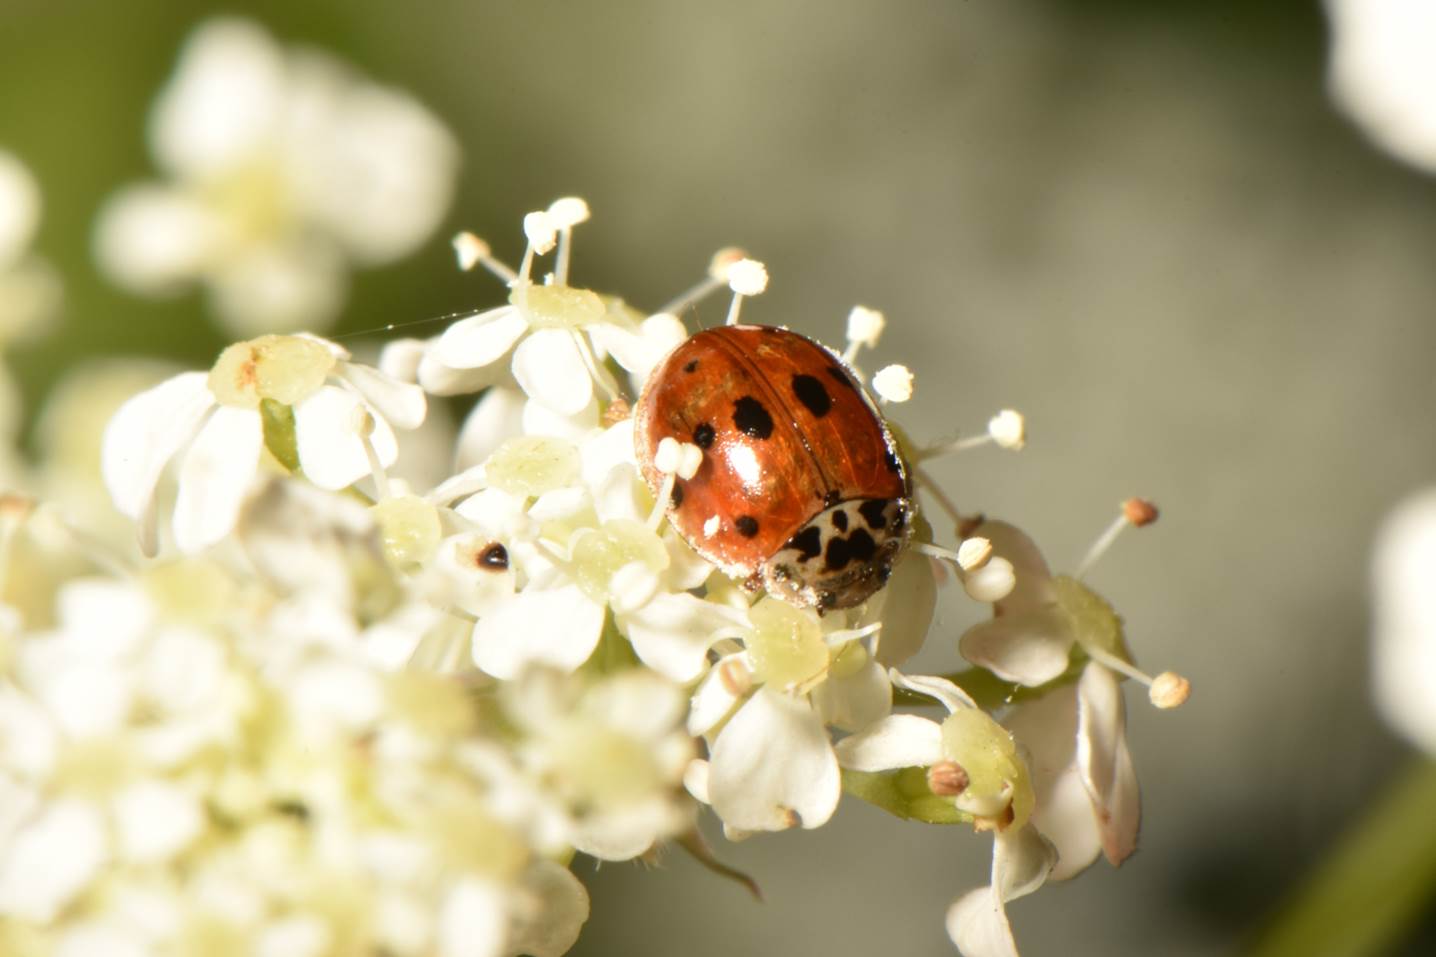 A ladybug on a flower

Description automatically generated